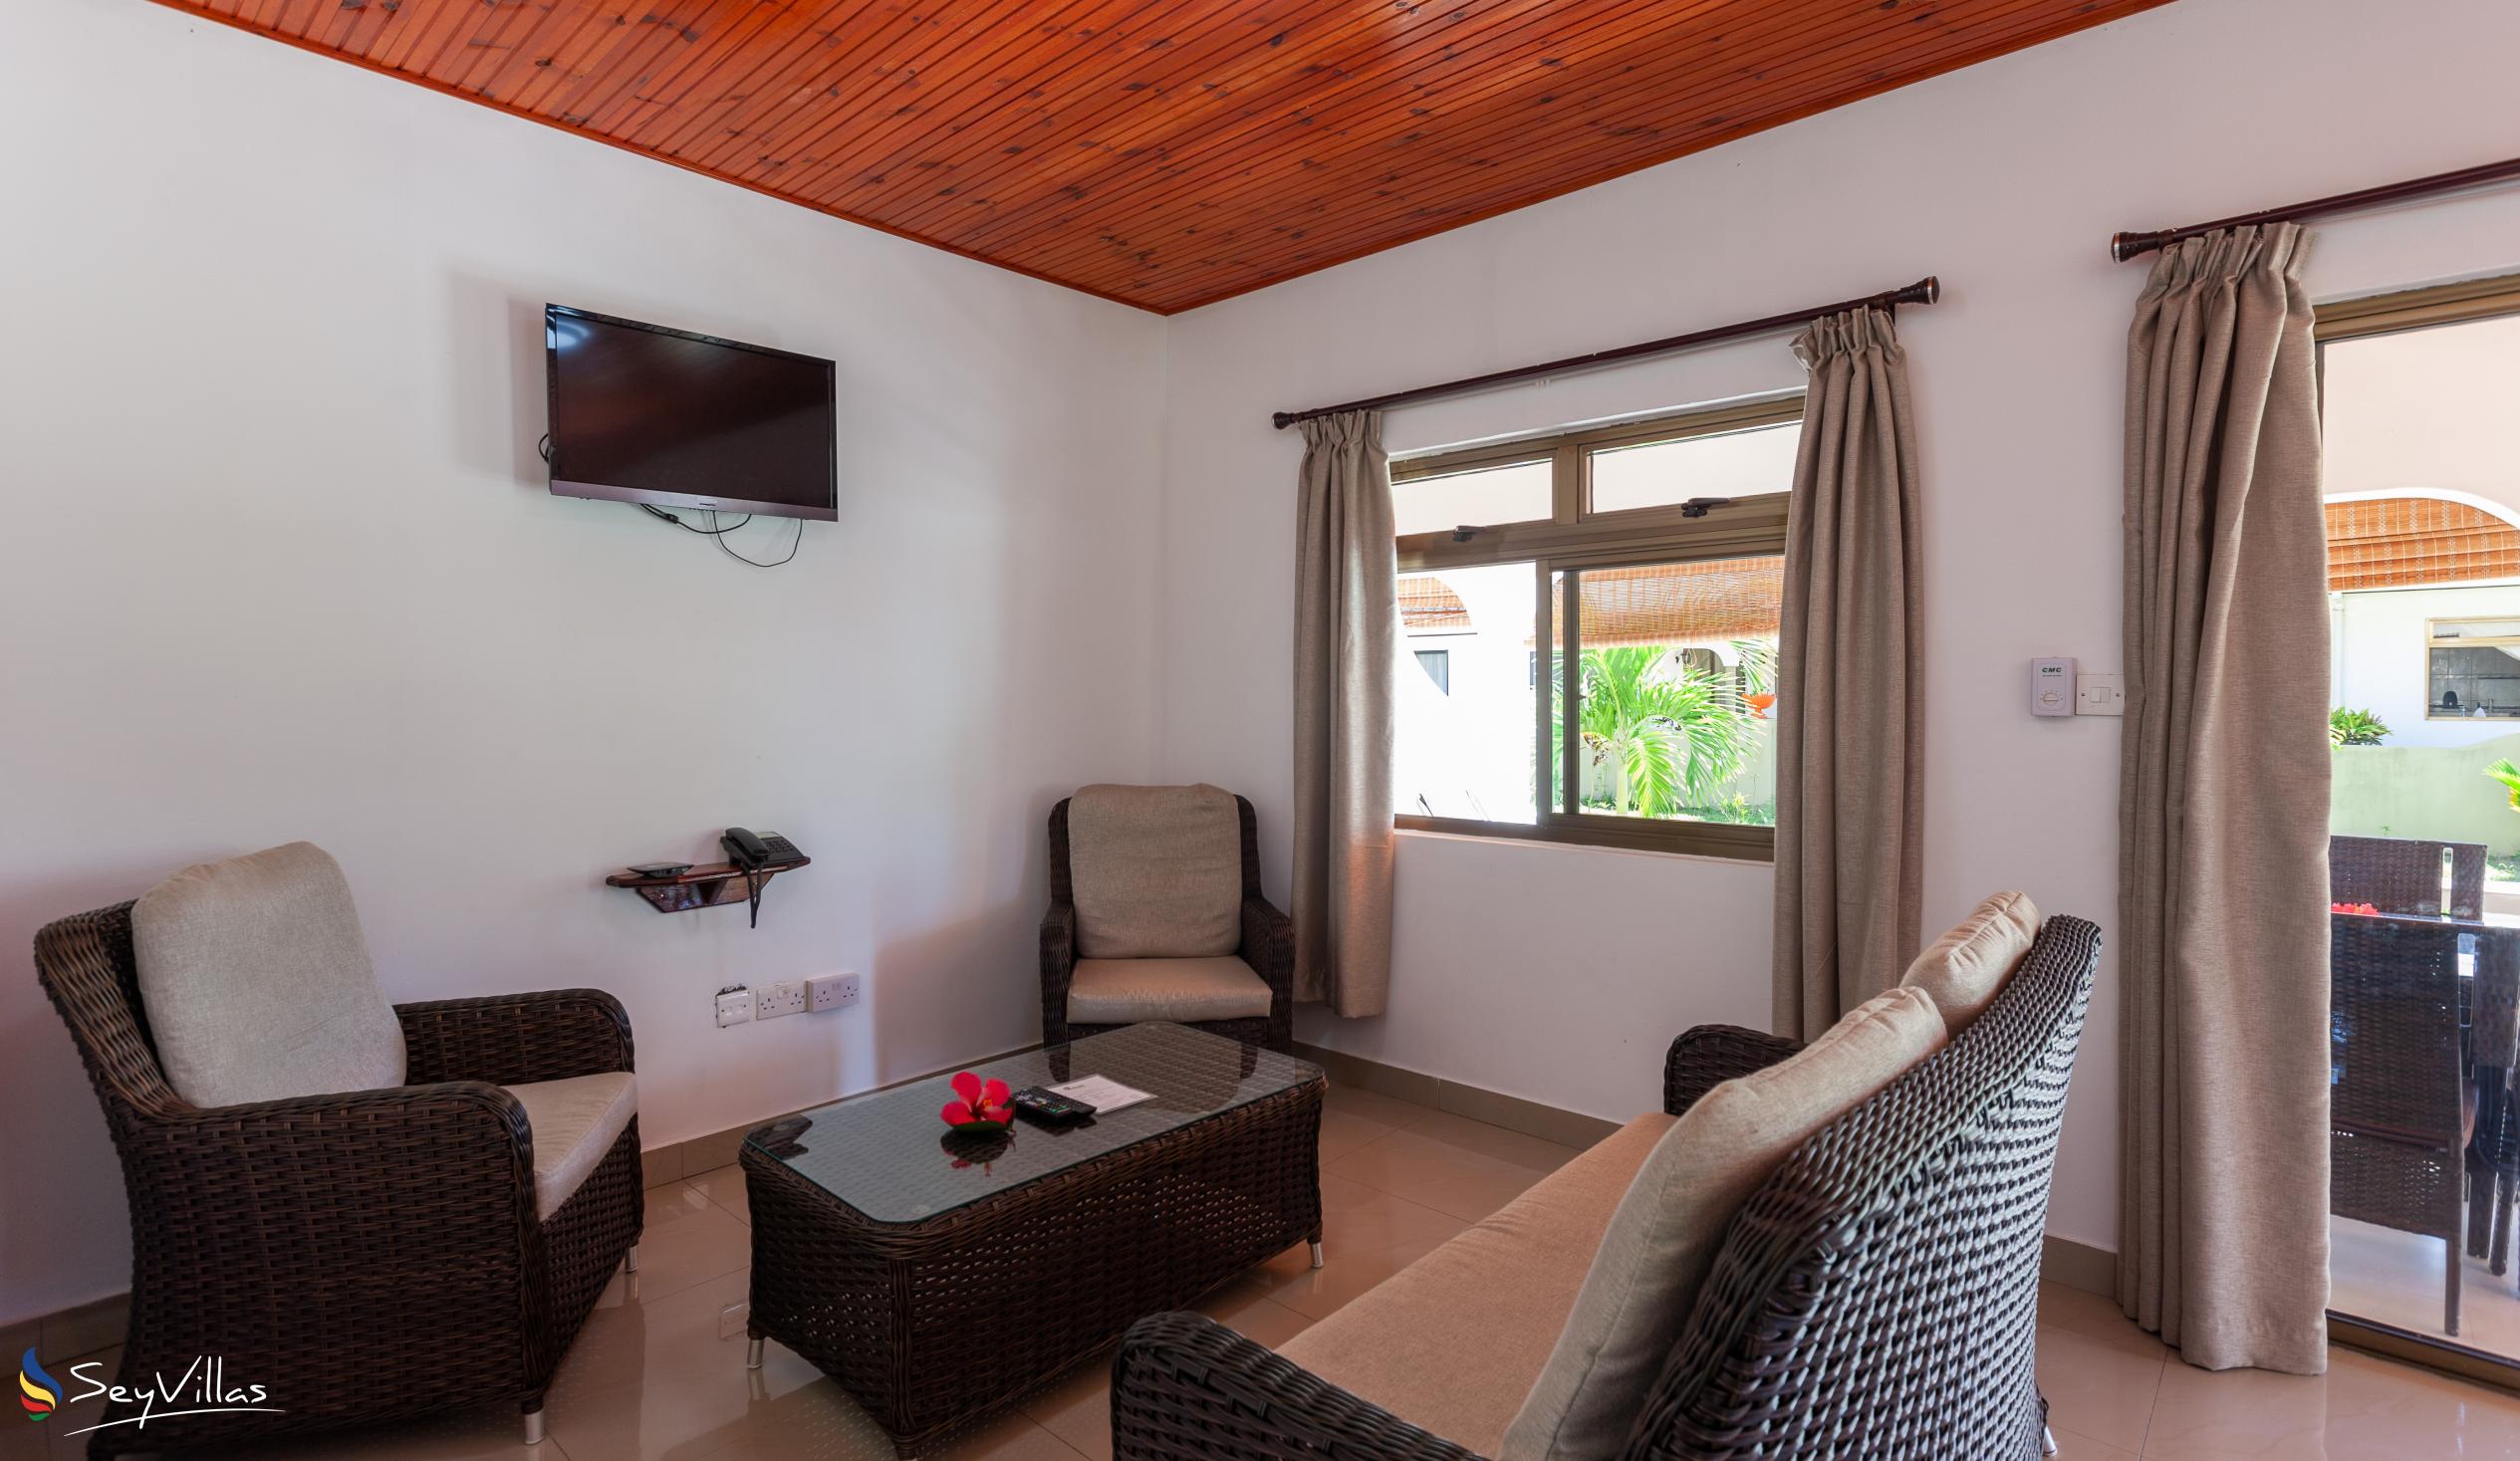 Photo 33: Tourterelle Holiday Home - 2-Bedroom Apartment - Praslin (Seychelles)